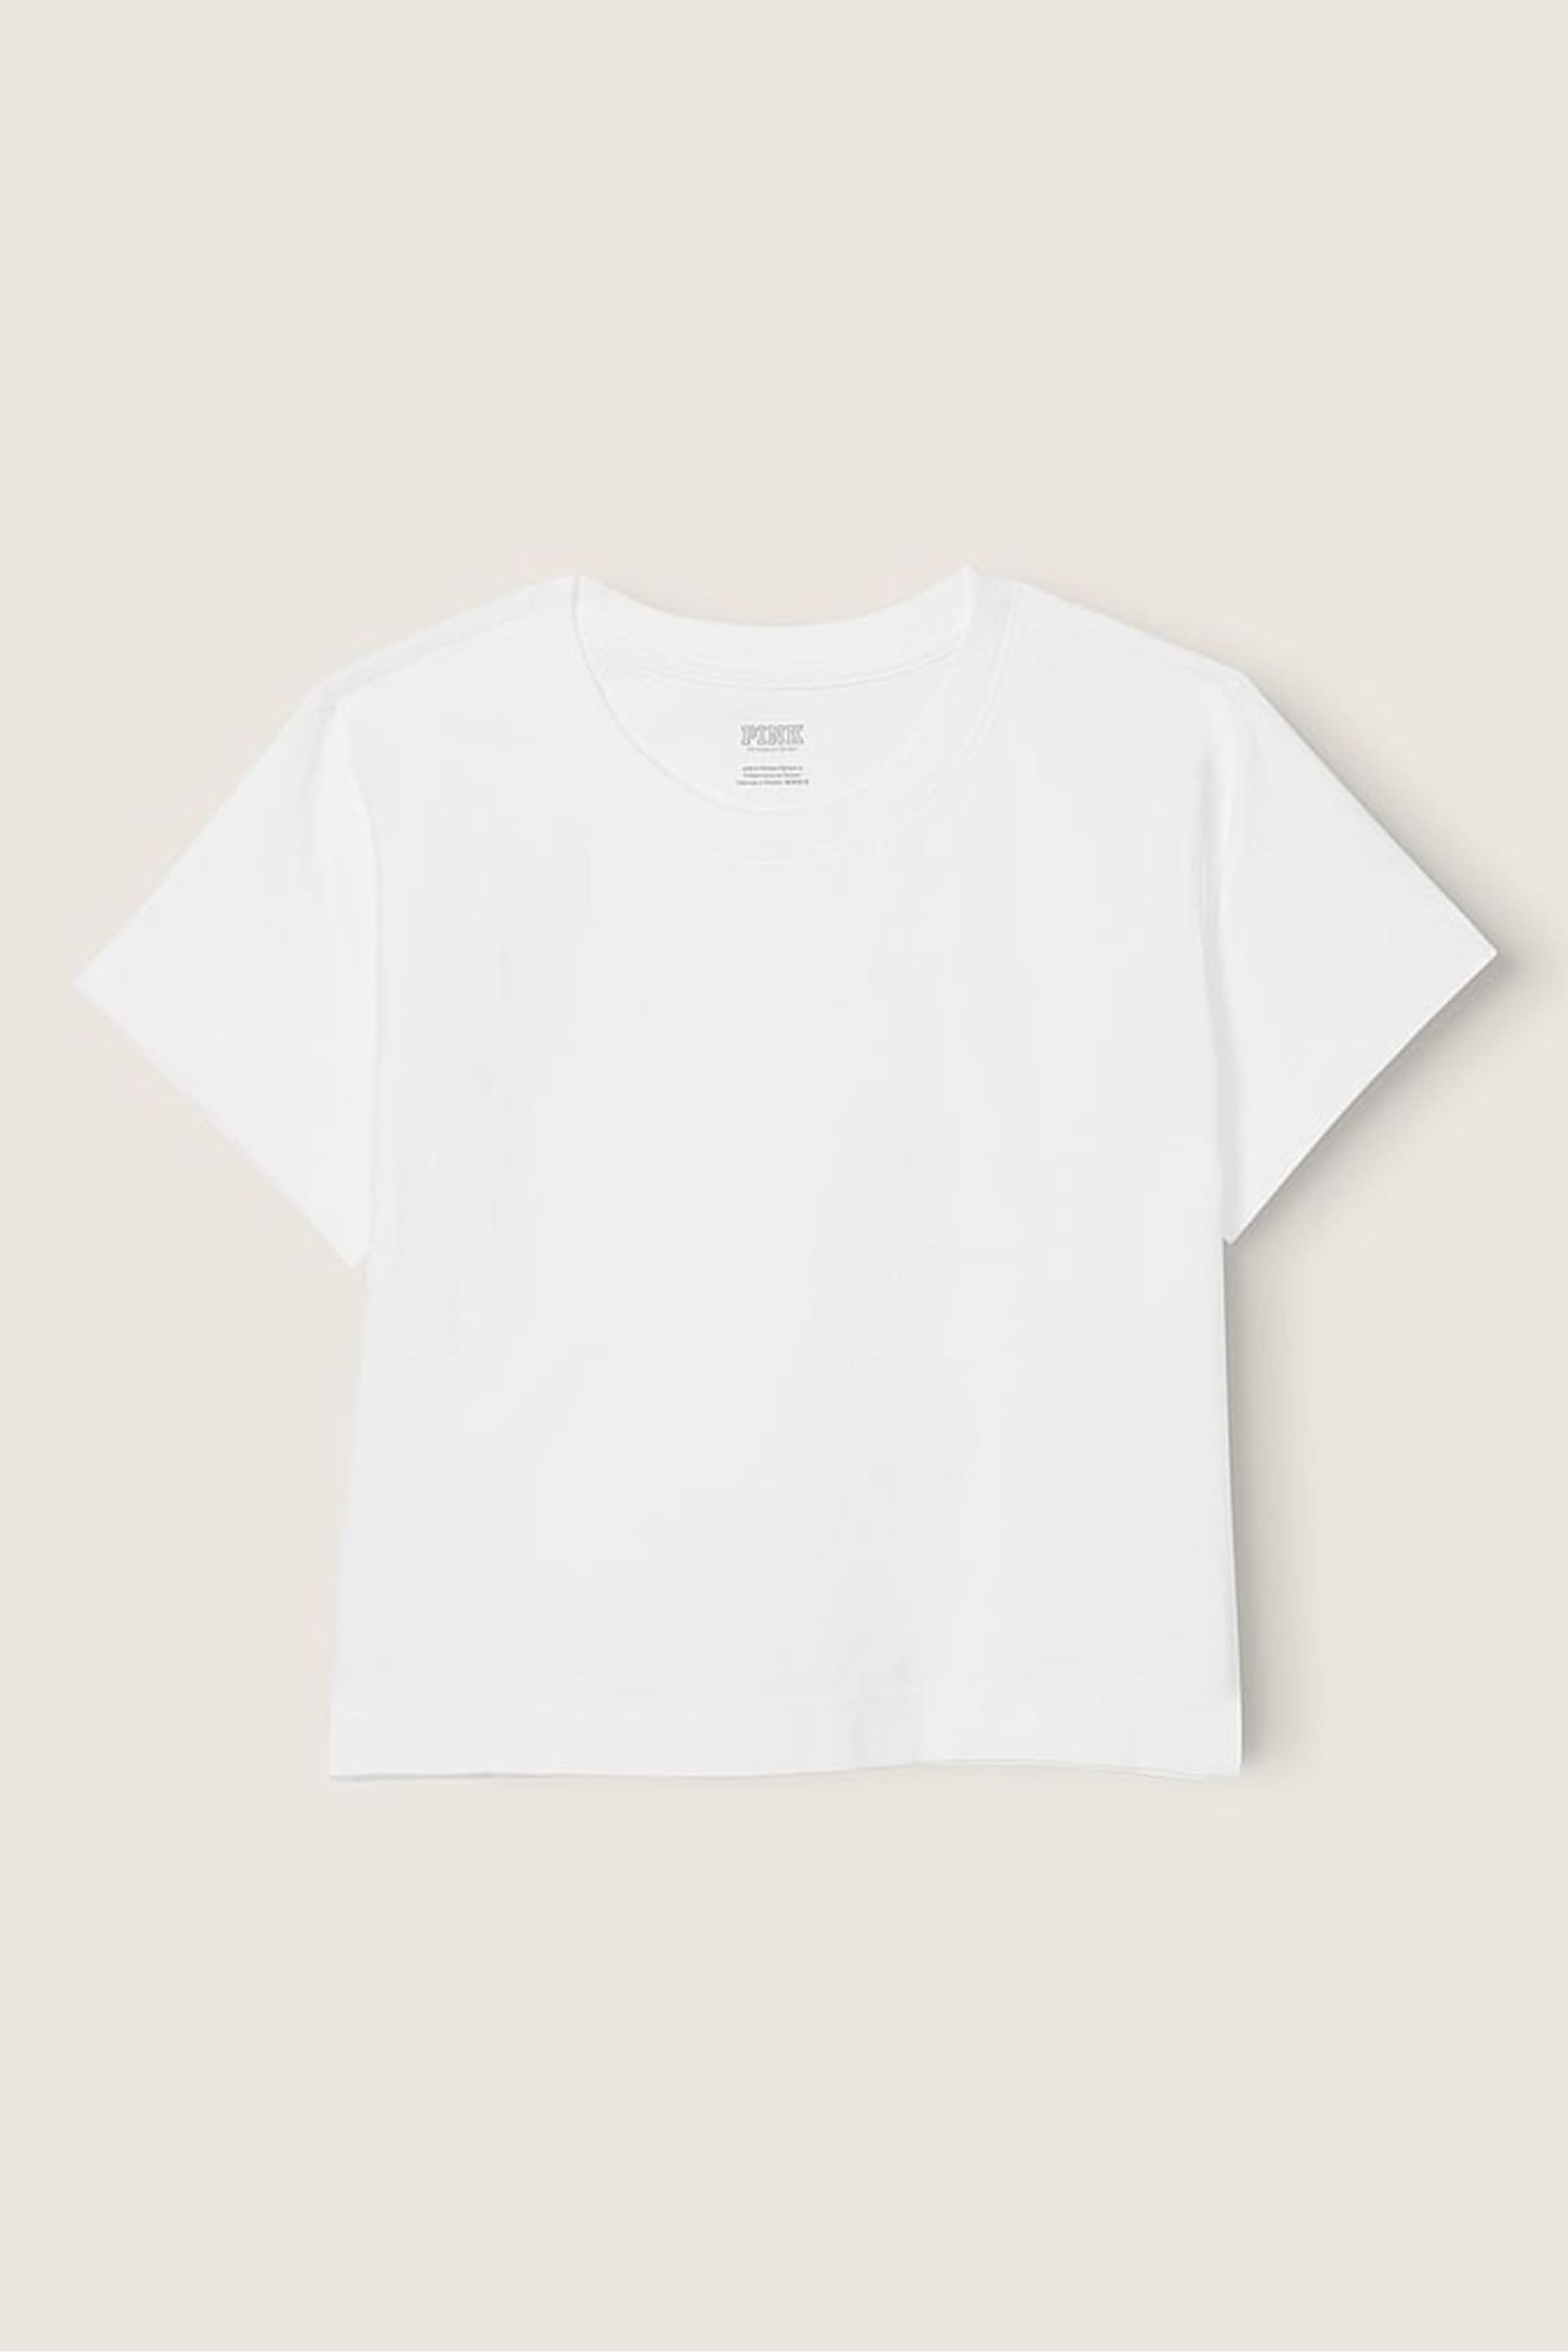 Victoria's Secret PINK Optic White Short Sleeve Shrunken T-Shirt - Image 4 of 4